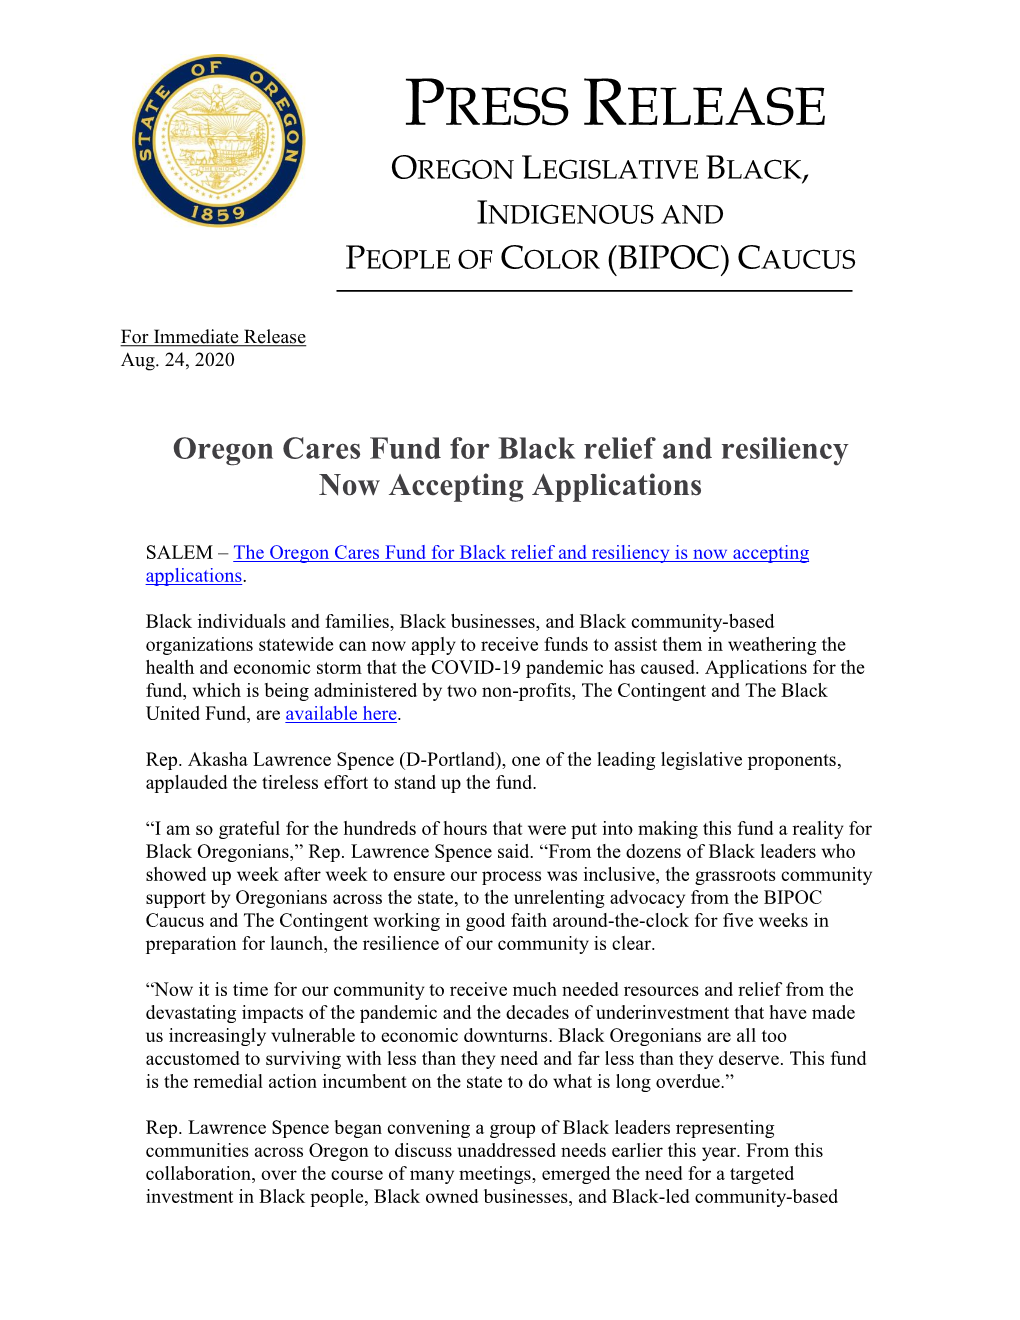 Press Release Oregon Legislative Black